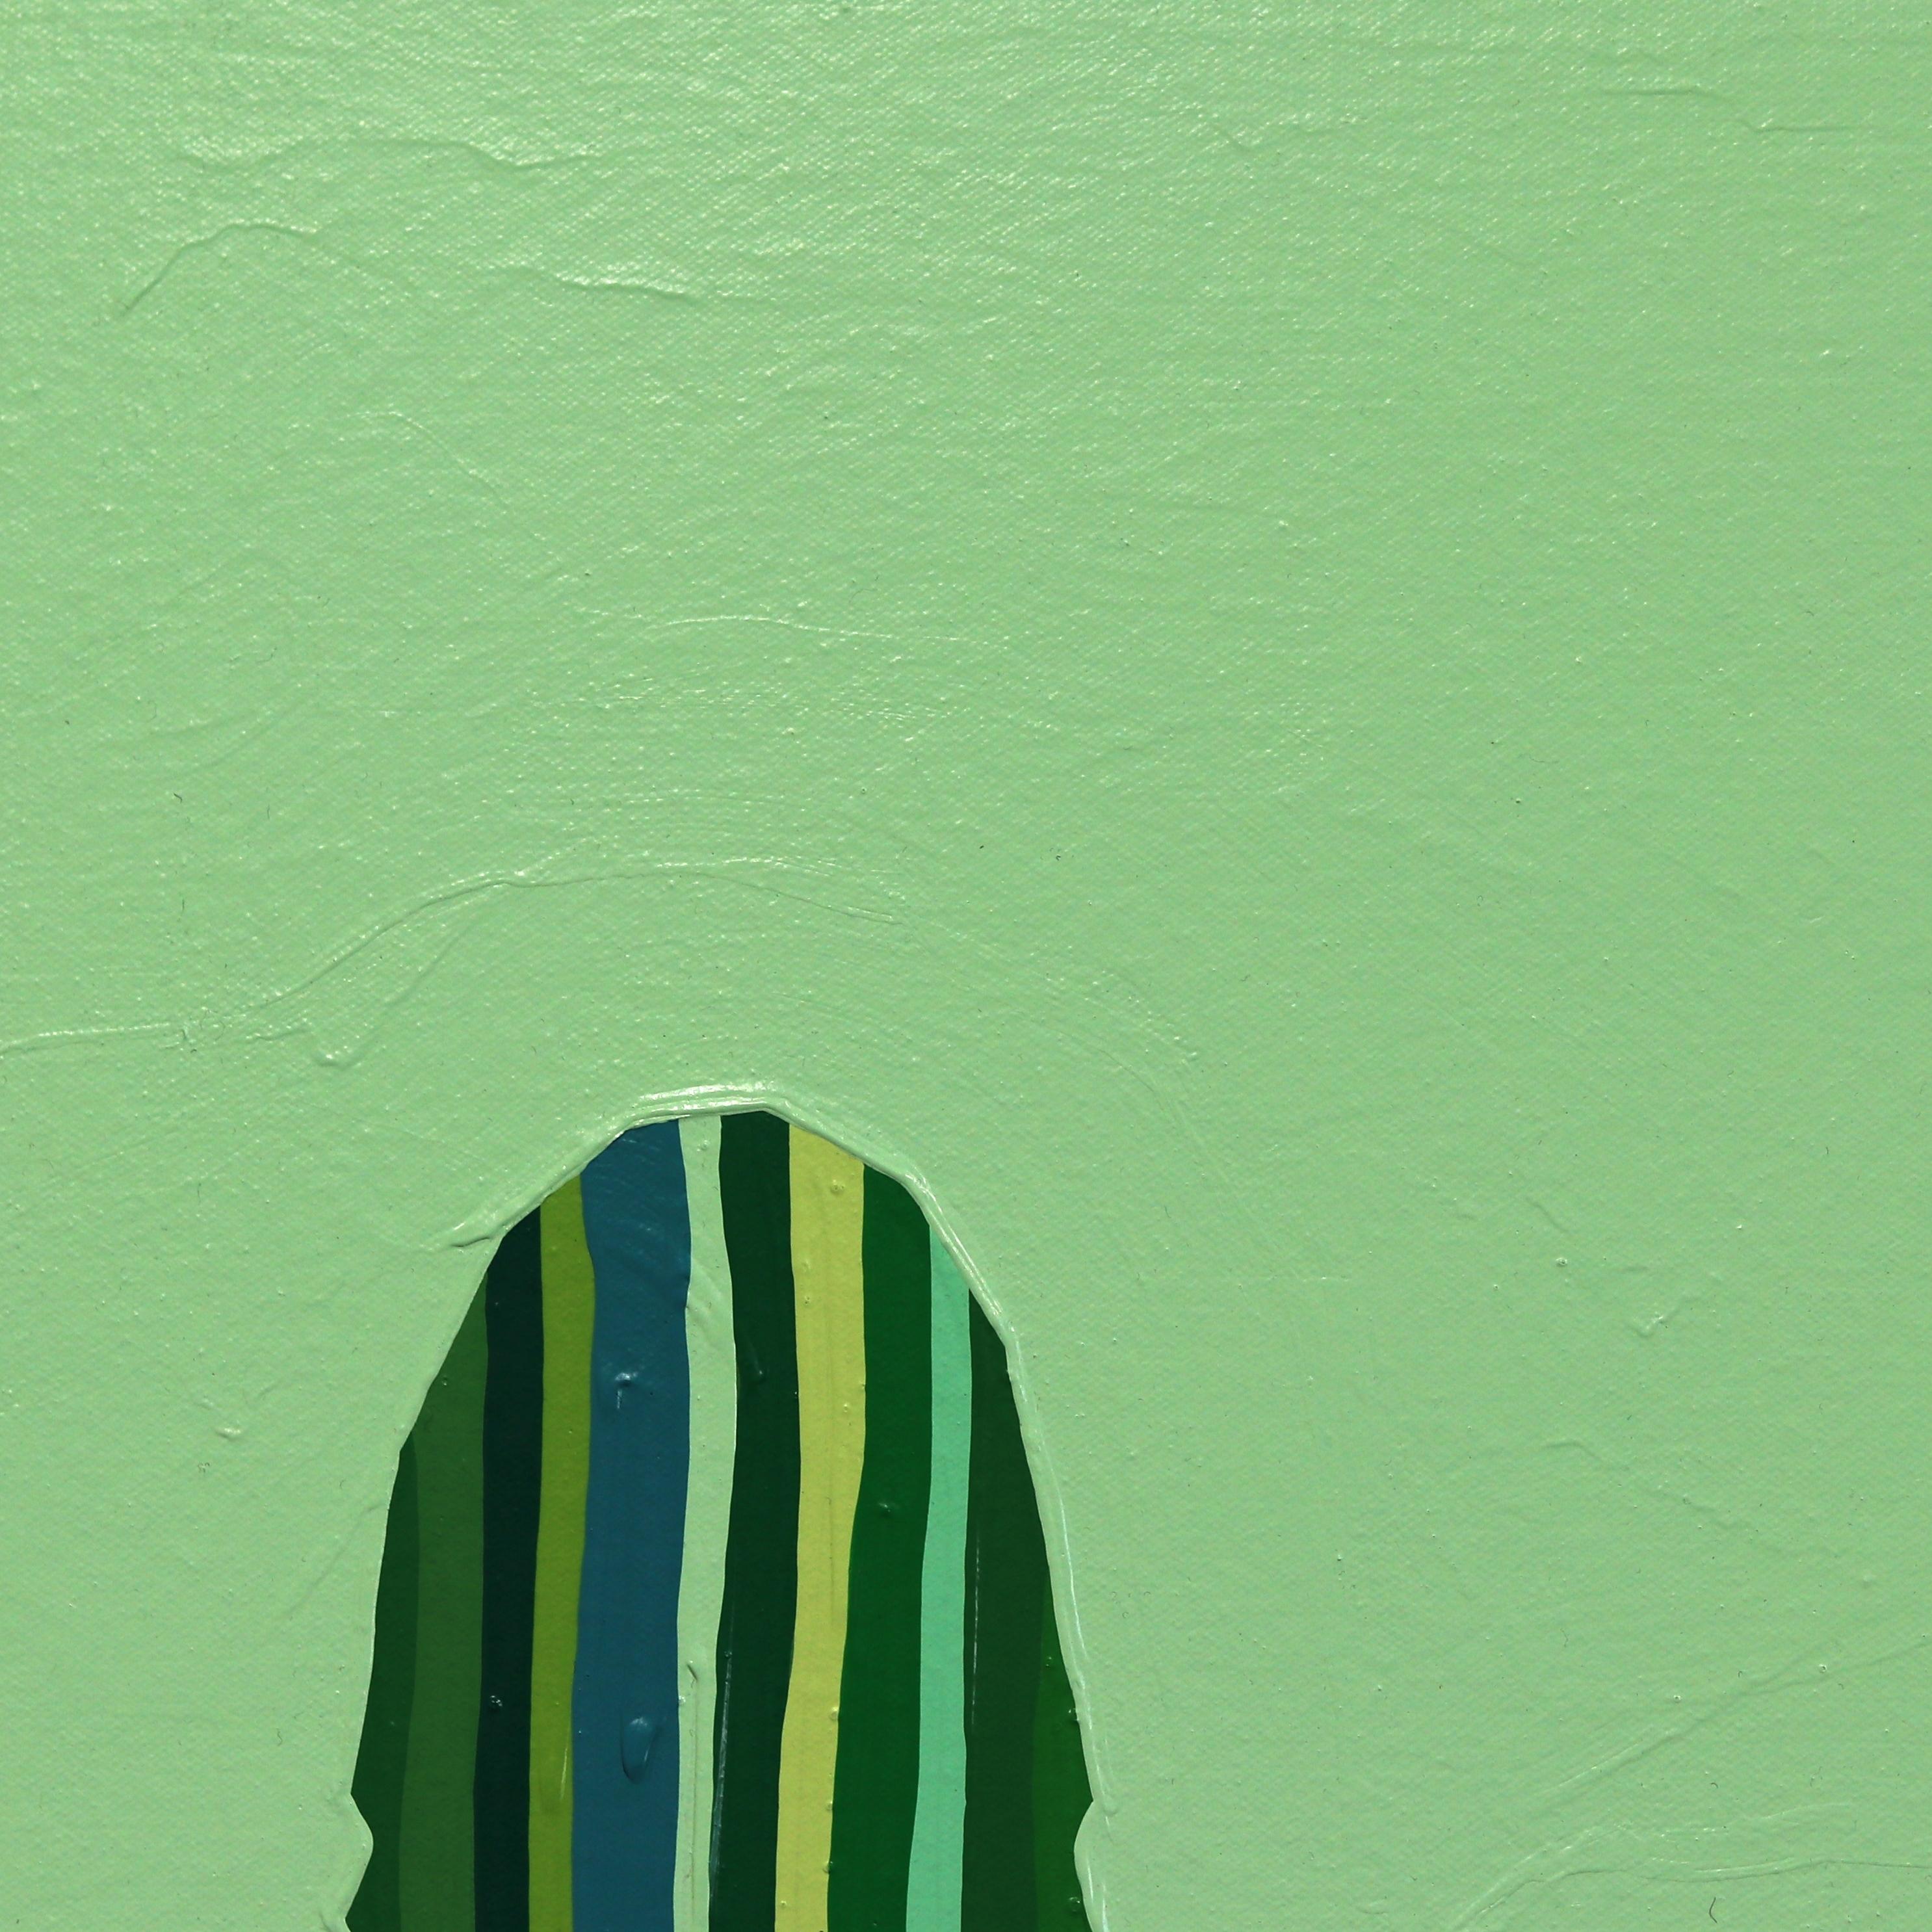 Verde y Verde -  Vibrant Green Southwest Inspired Pop Art Landscape Painting For Sale 1